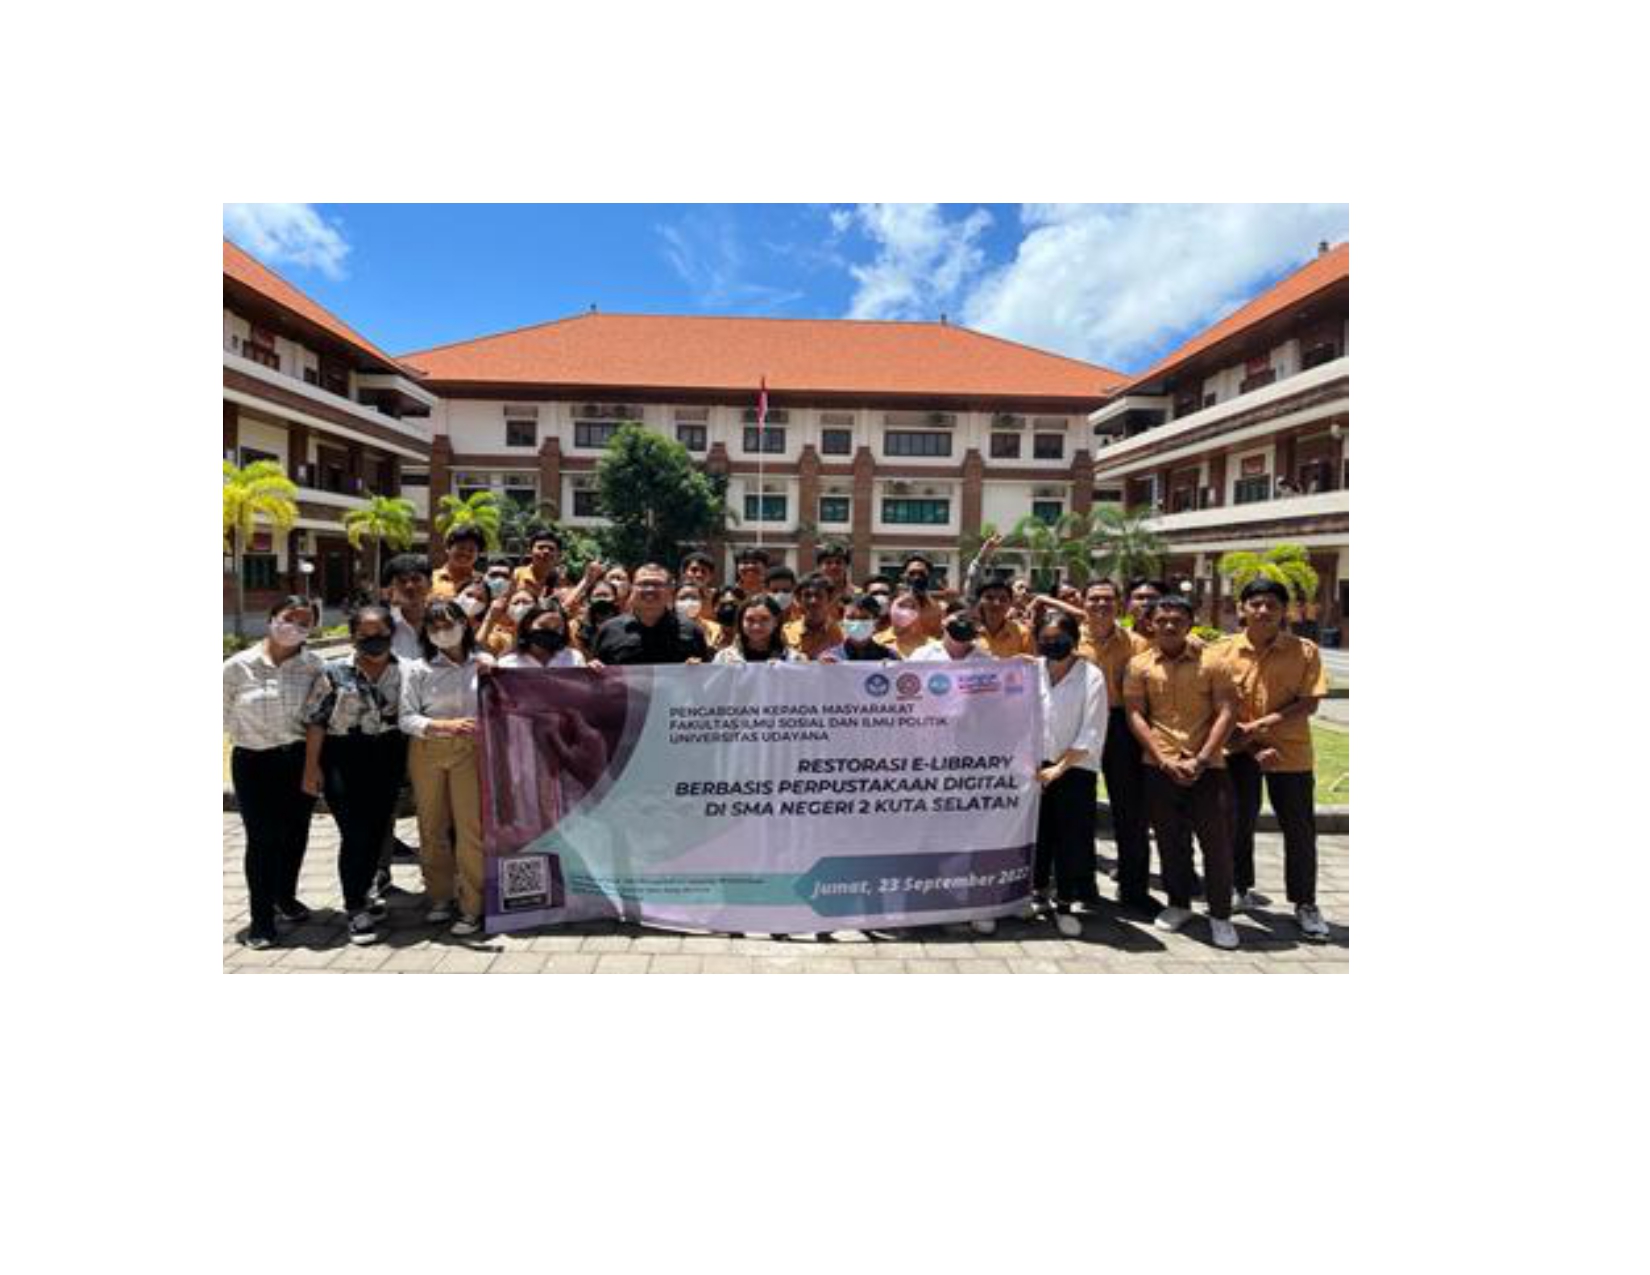 Restoration of e-Library at SMA Negeri 2 Kuta Selatan, Badung as a Community Service for the Academic Civitas FISIP Udayana University